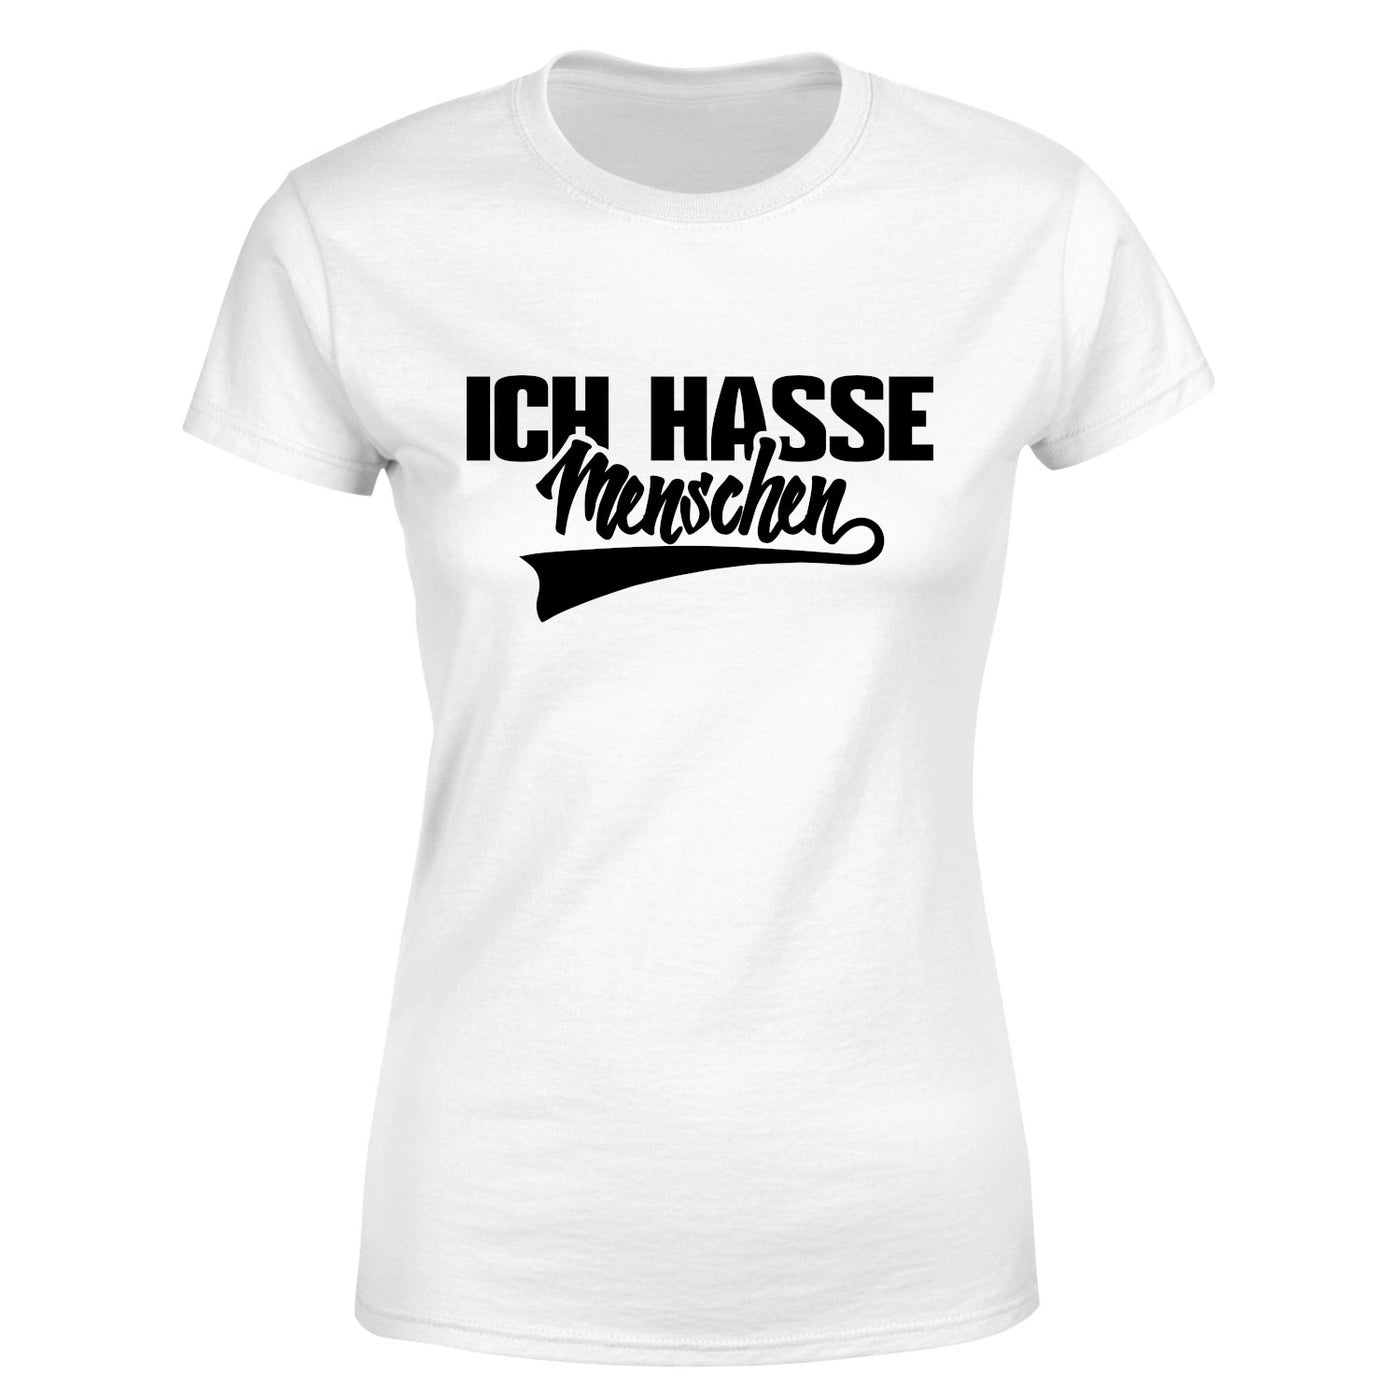 ich-hasse-menschen-shirt-wht-ft102wts